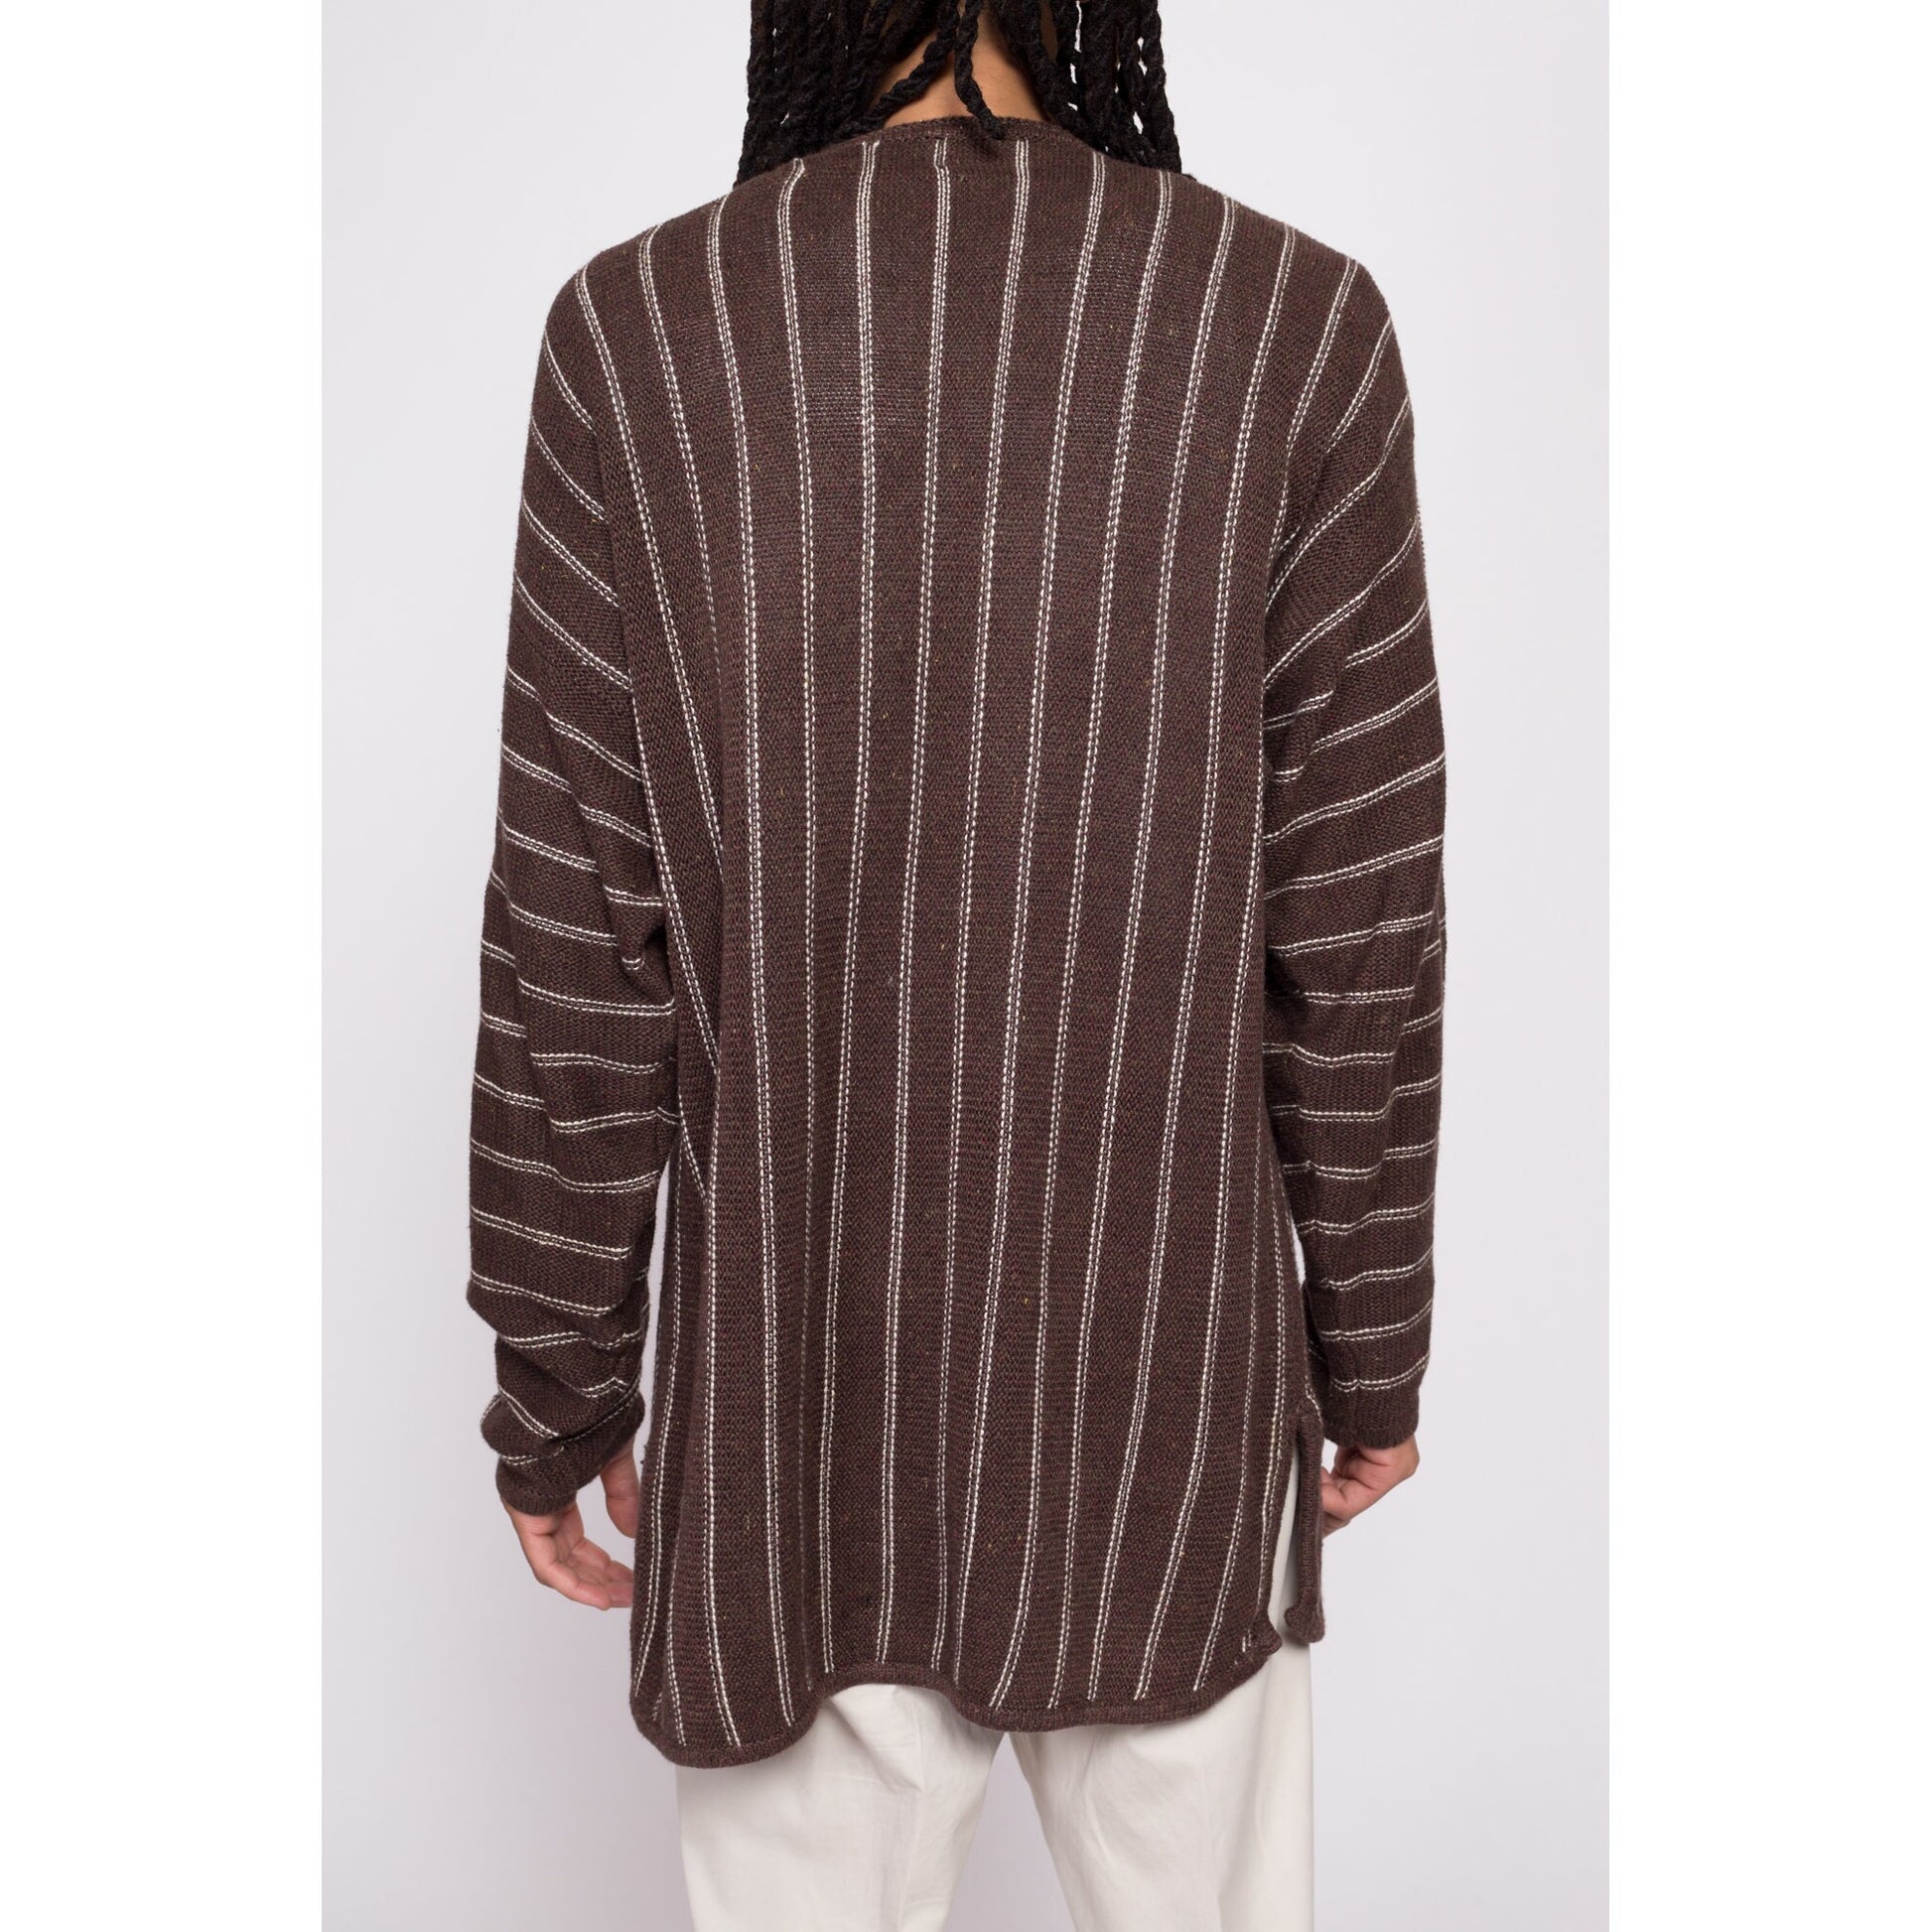 90s Brown & White Striped Tunic Sweater - Men's Medium to Large